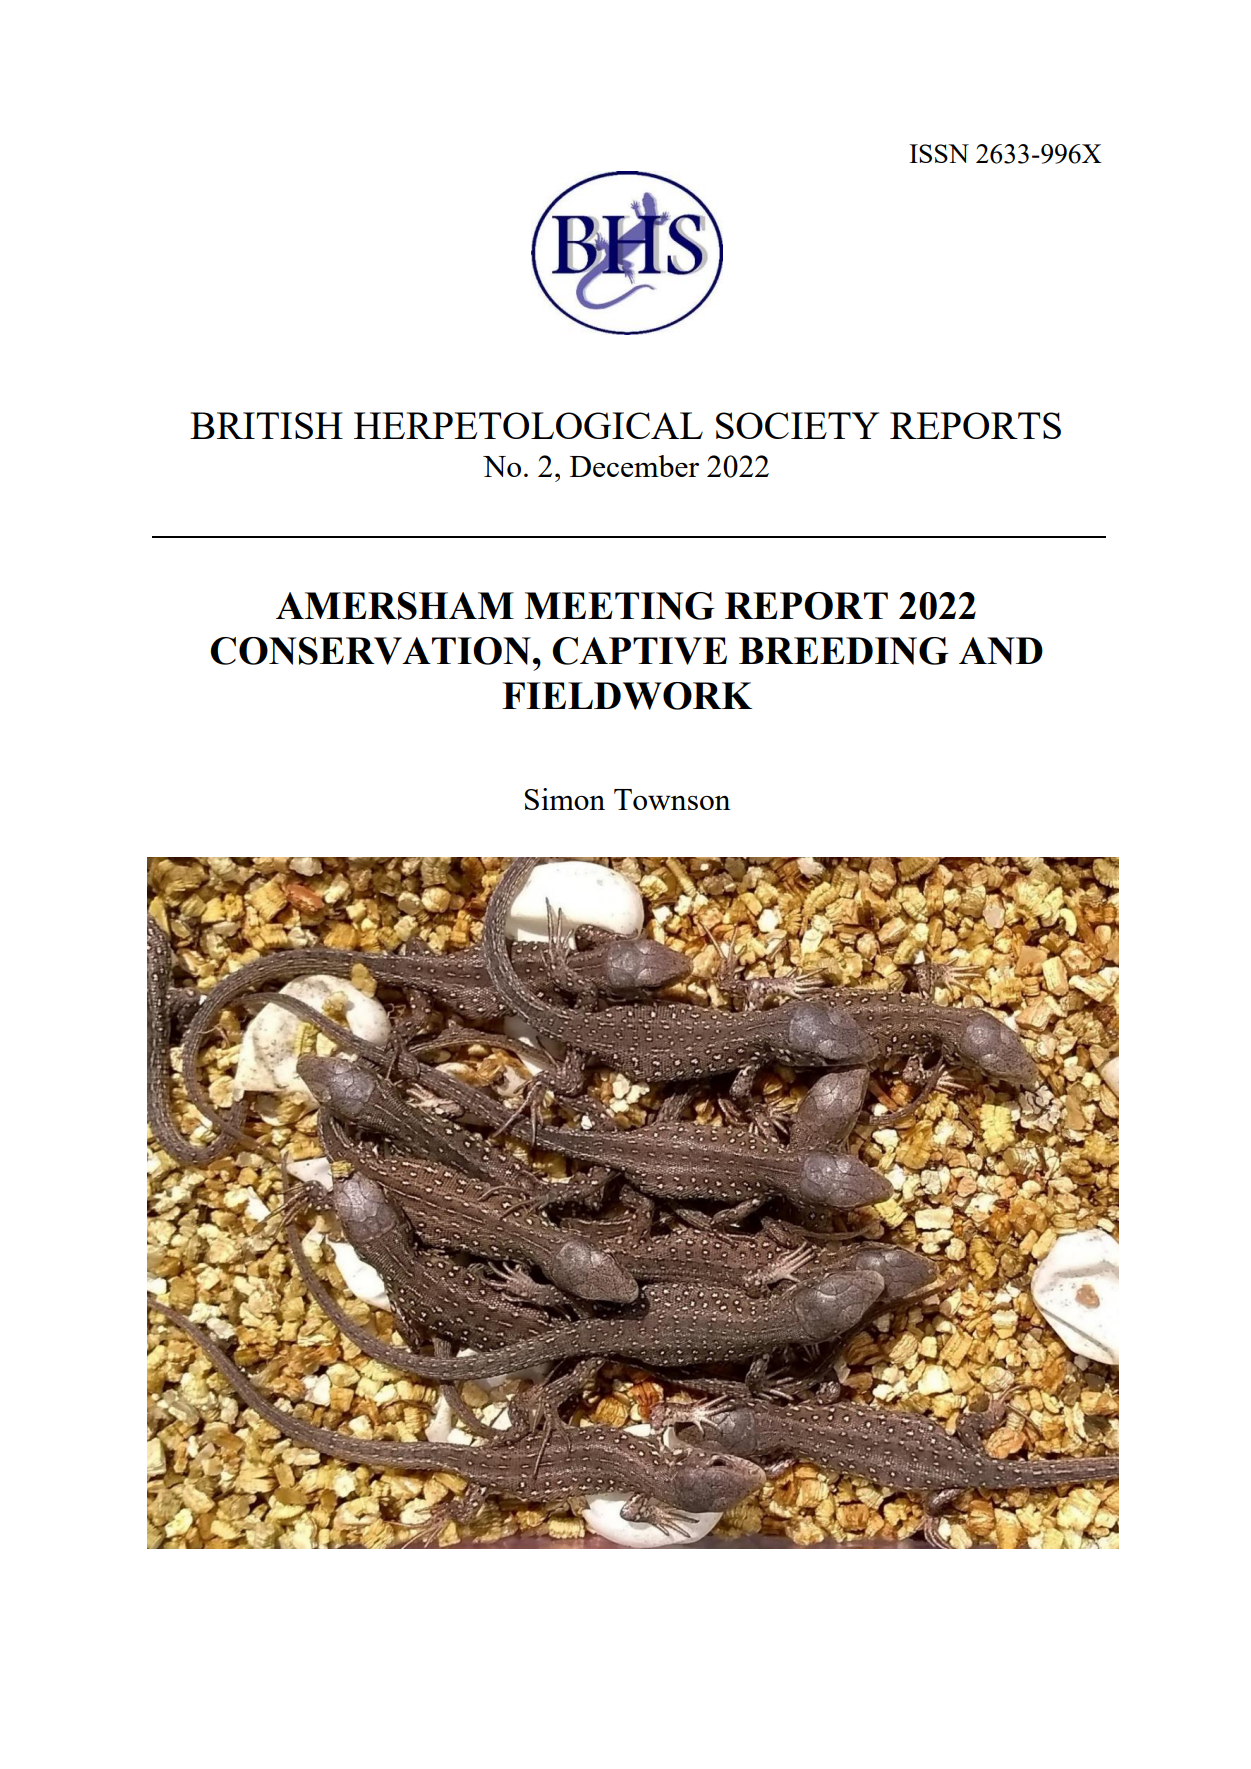 Amersham meeting report 2022  - conservation, captive breeding and fieldwork